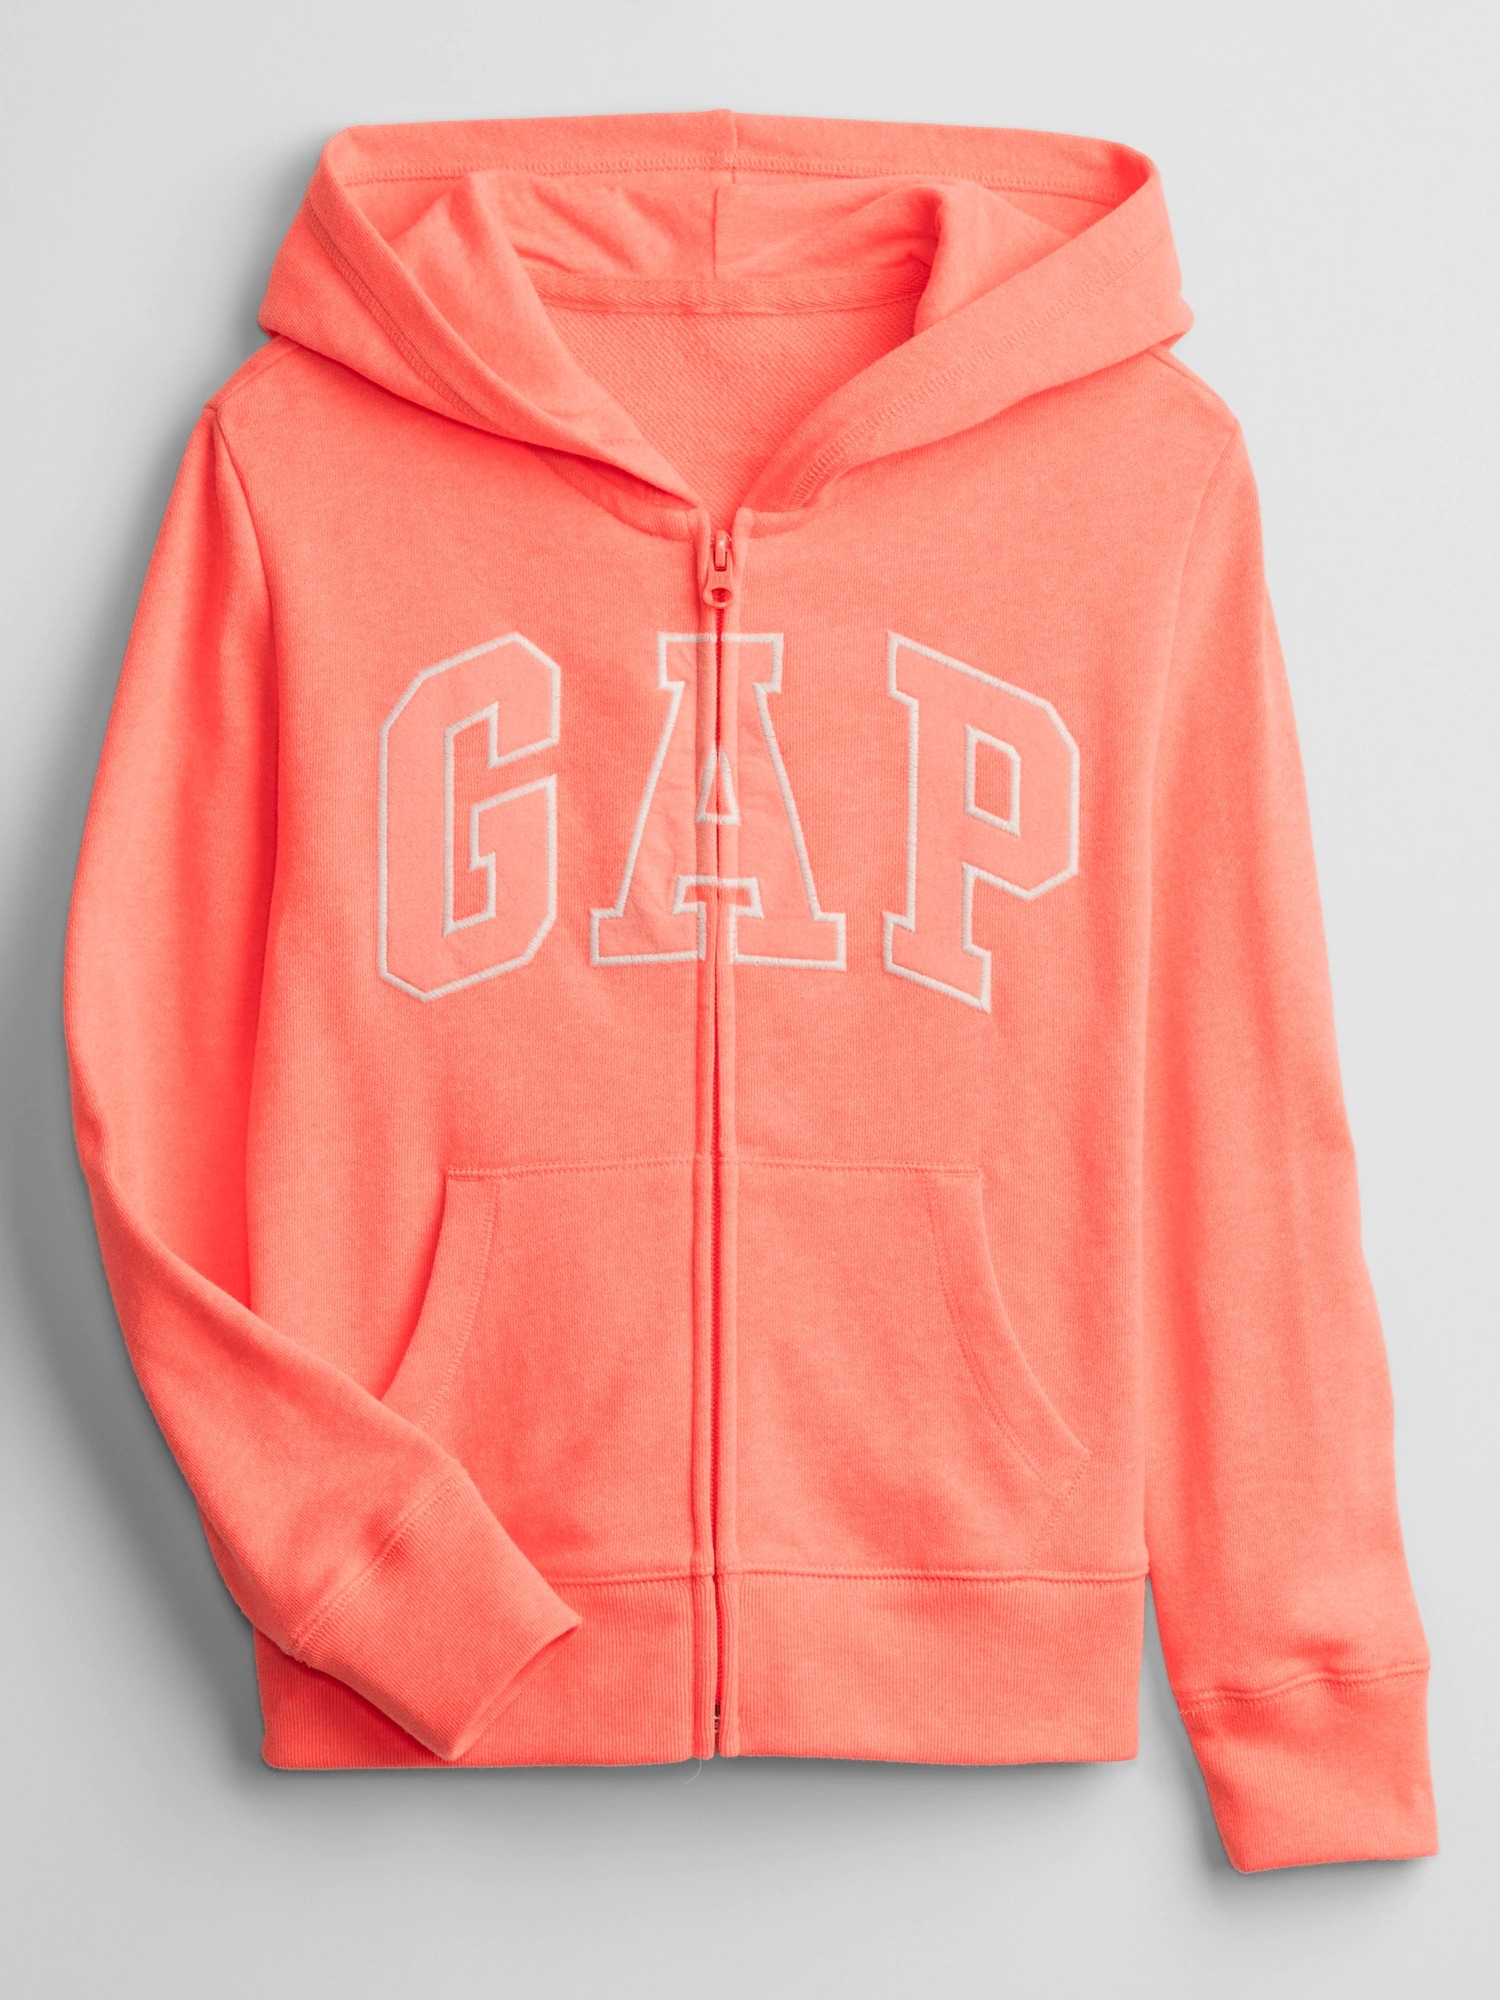 Gap Logo Fermuarlı Sweatshirt. 1